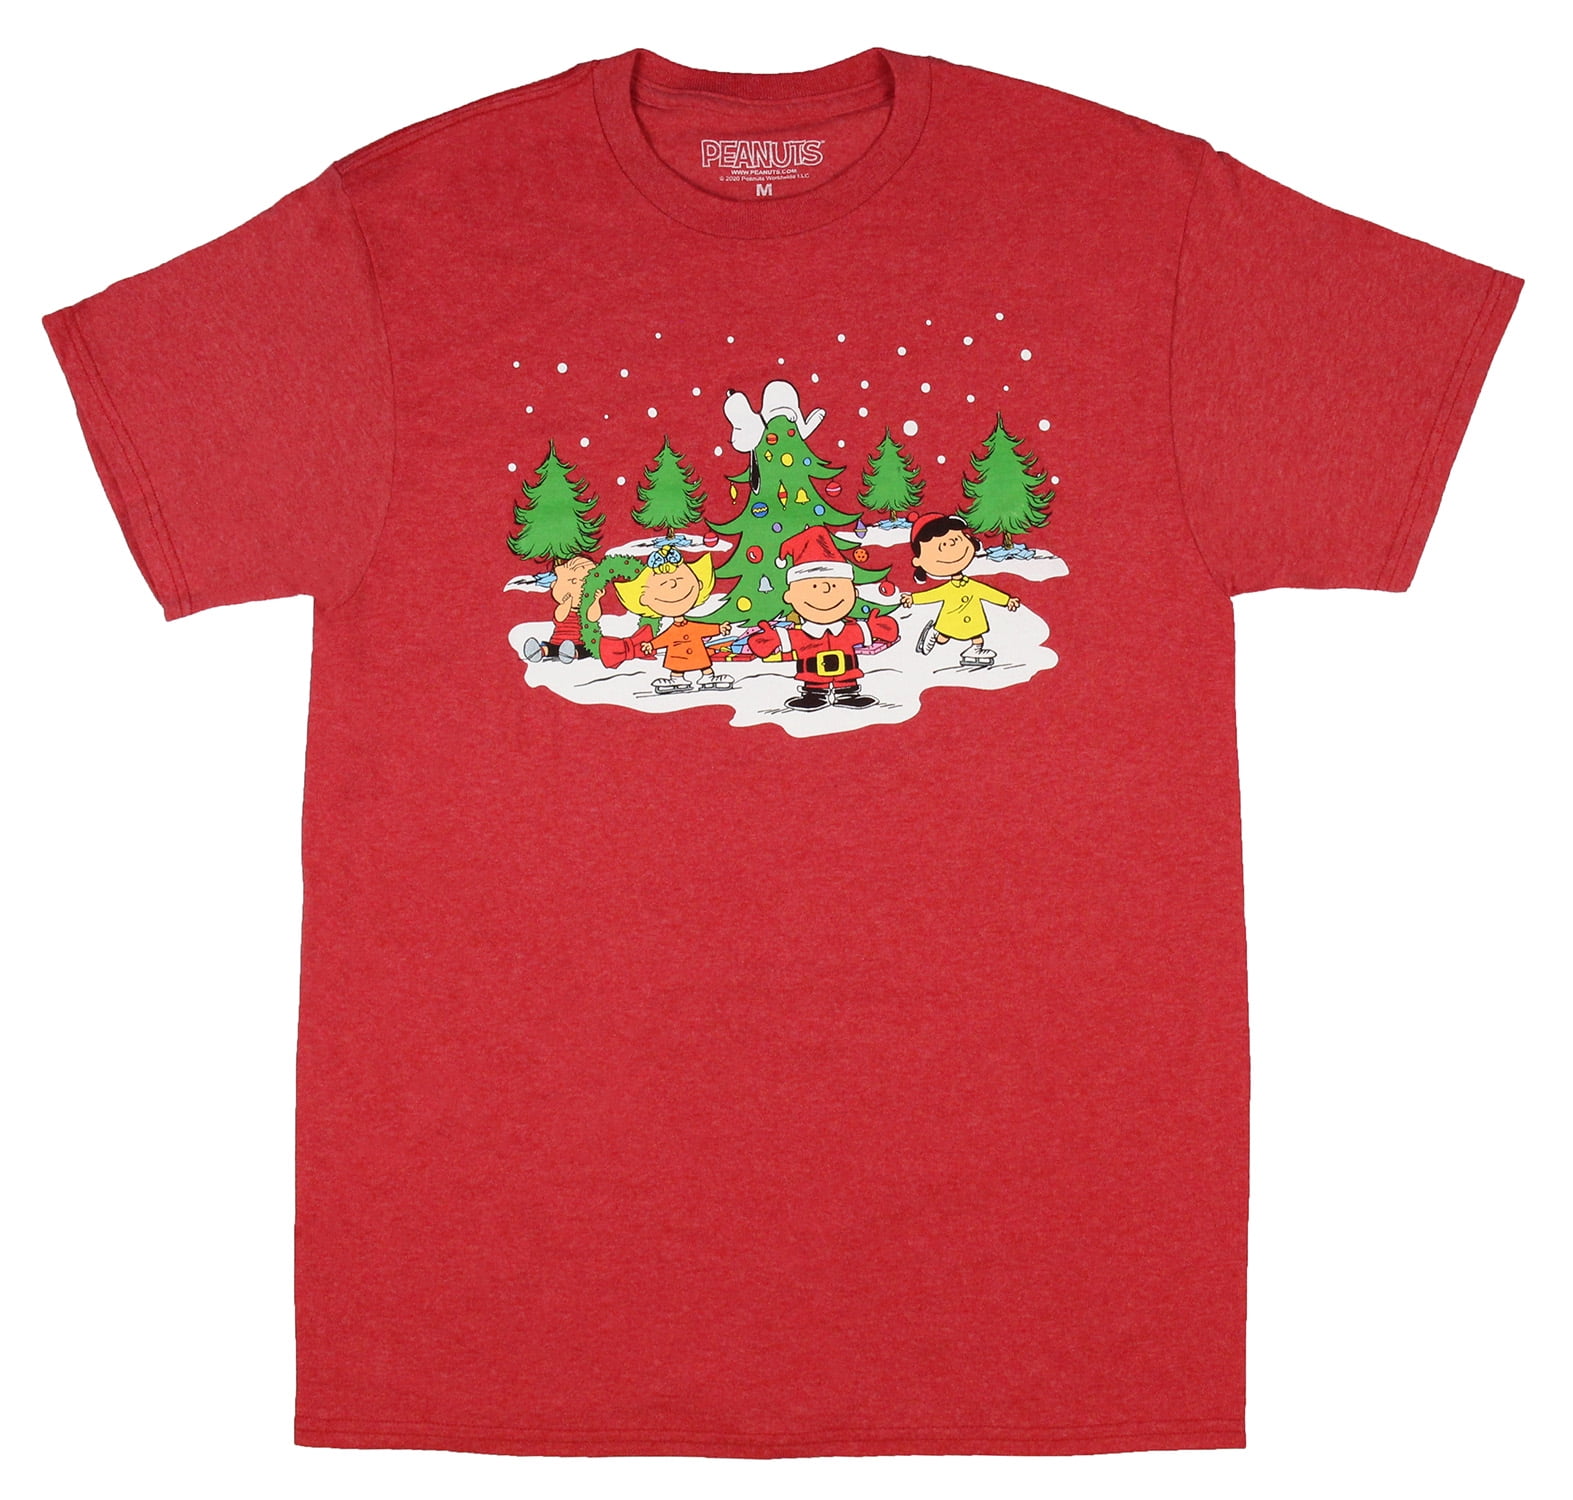 New Peanuts Snoopy Christmas Holiday shirt men's sizes S-2XL X-mas shirt 